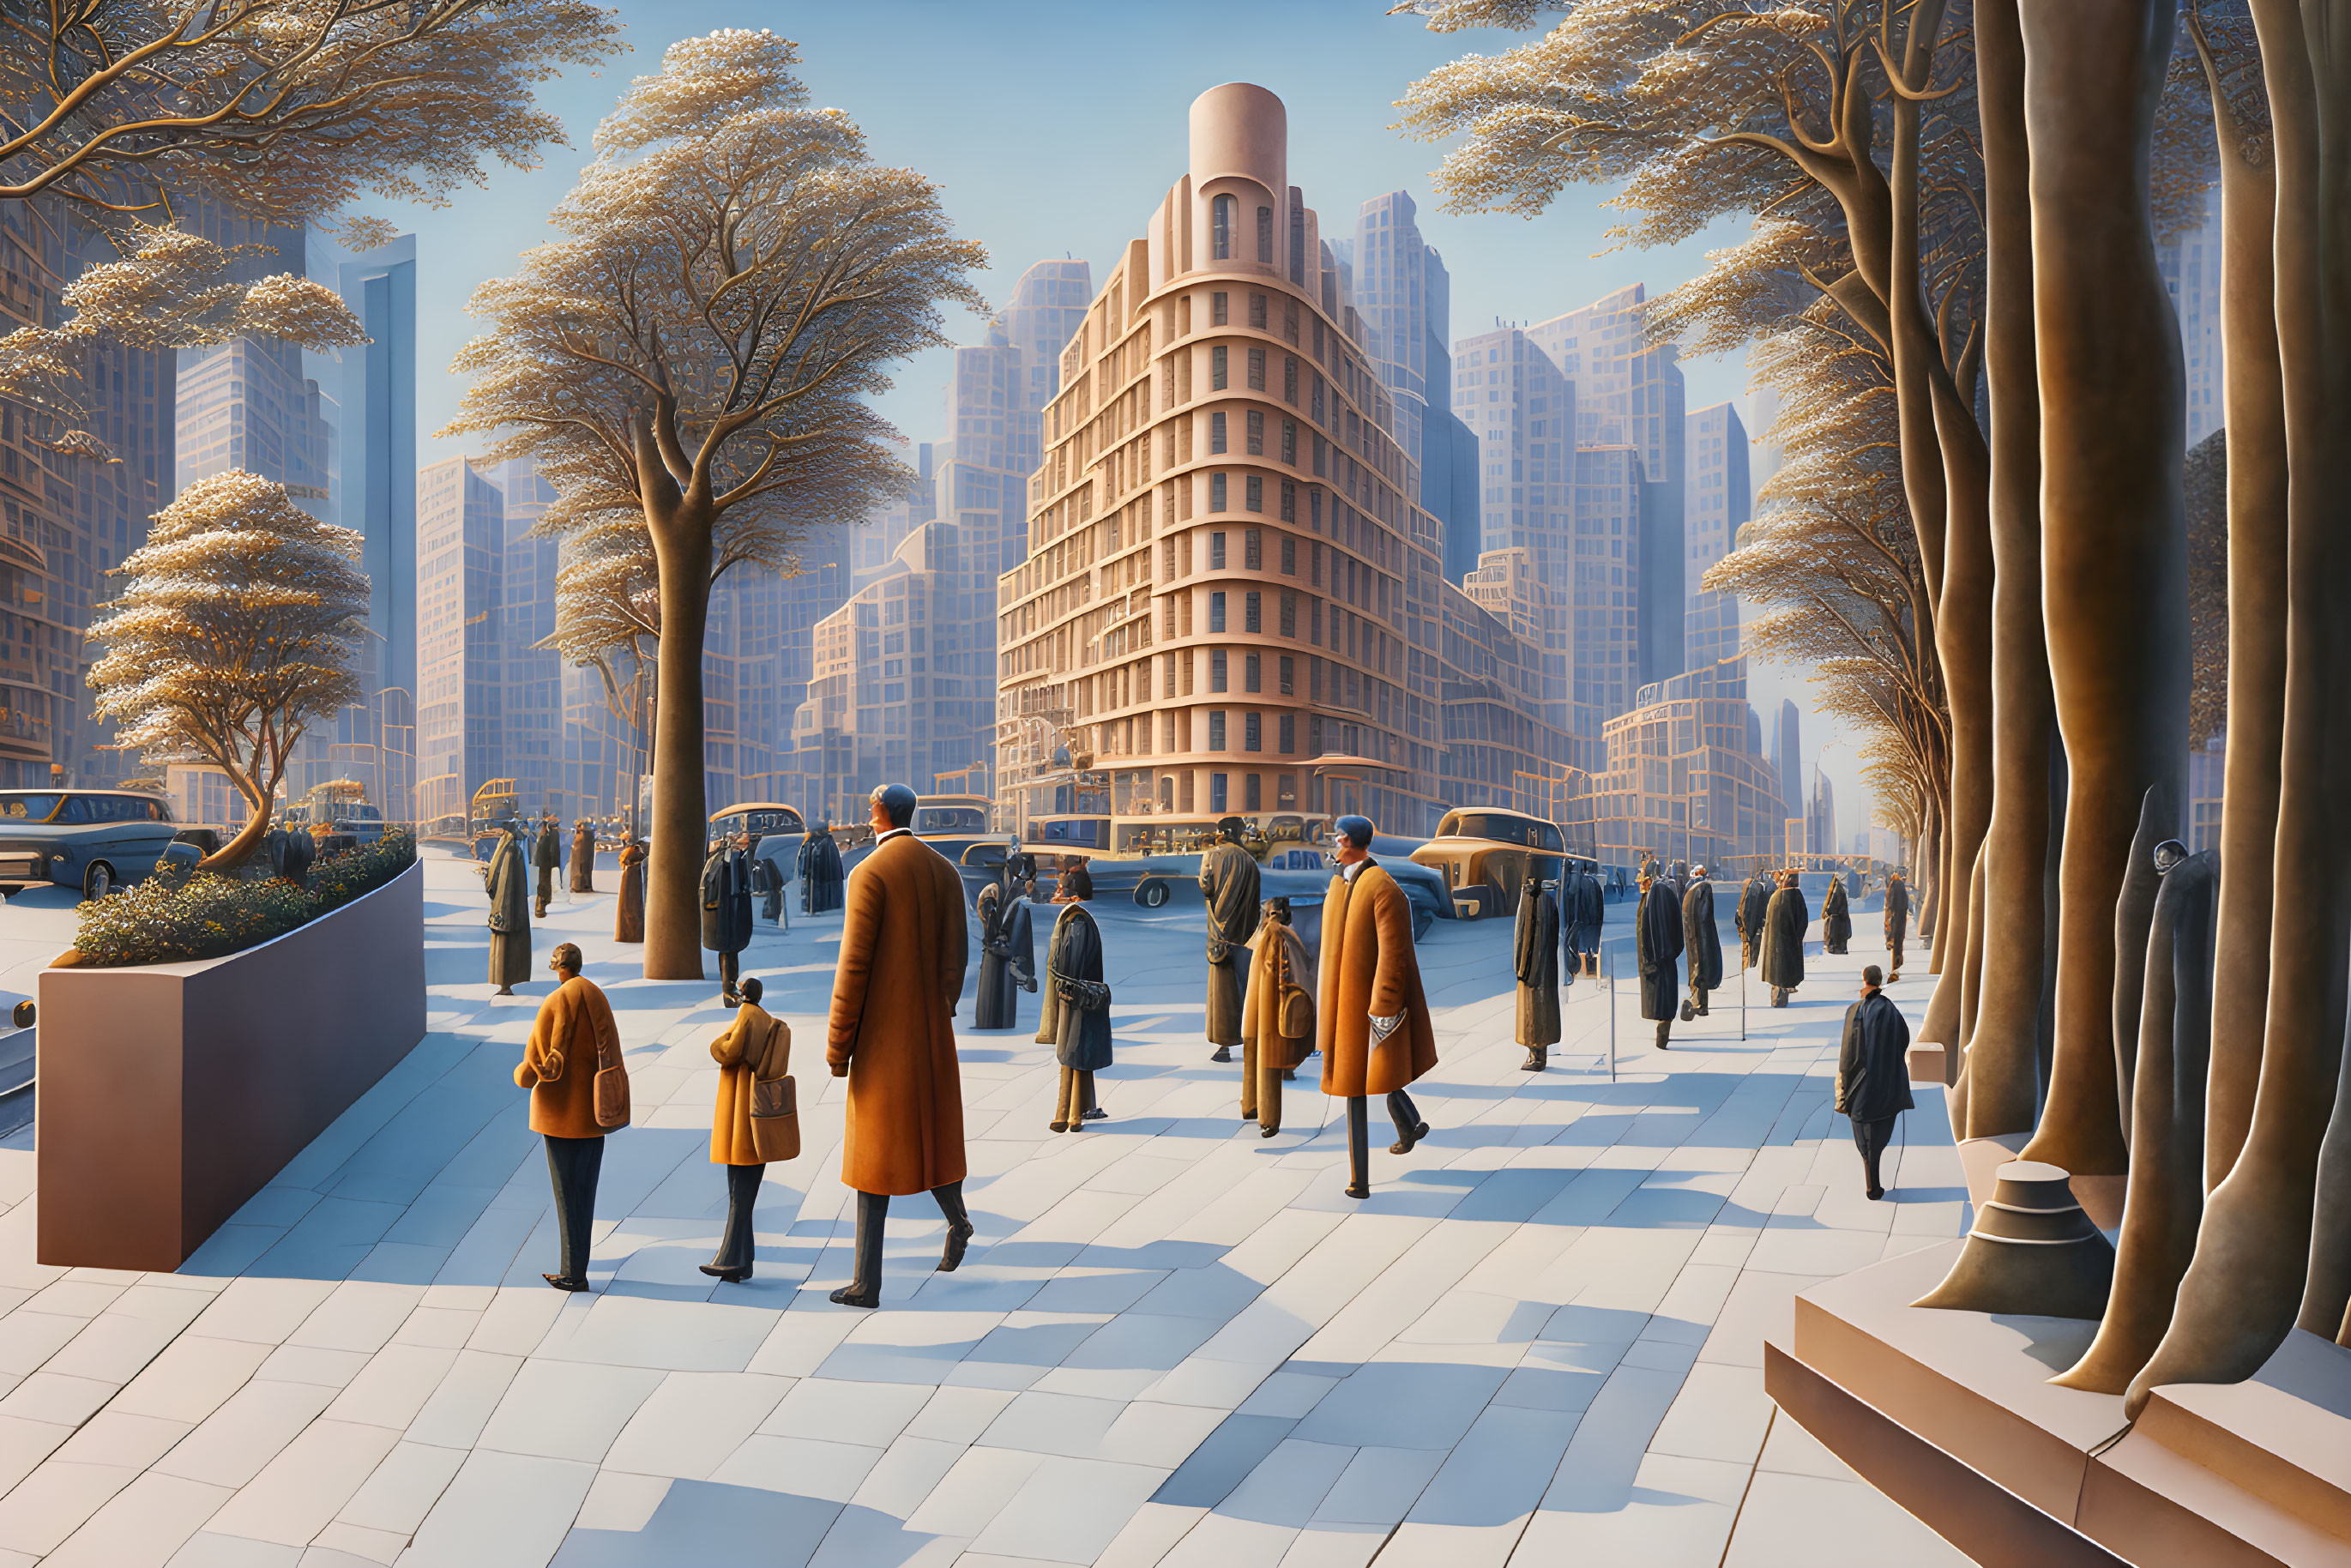 People in a futuristic American city